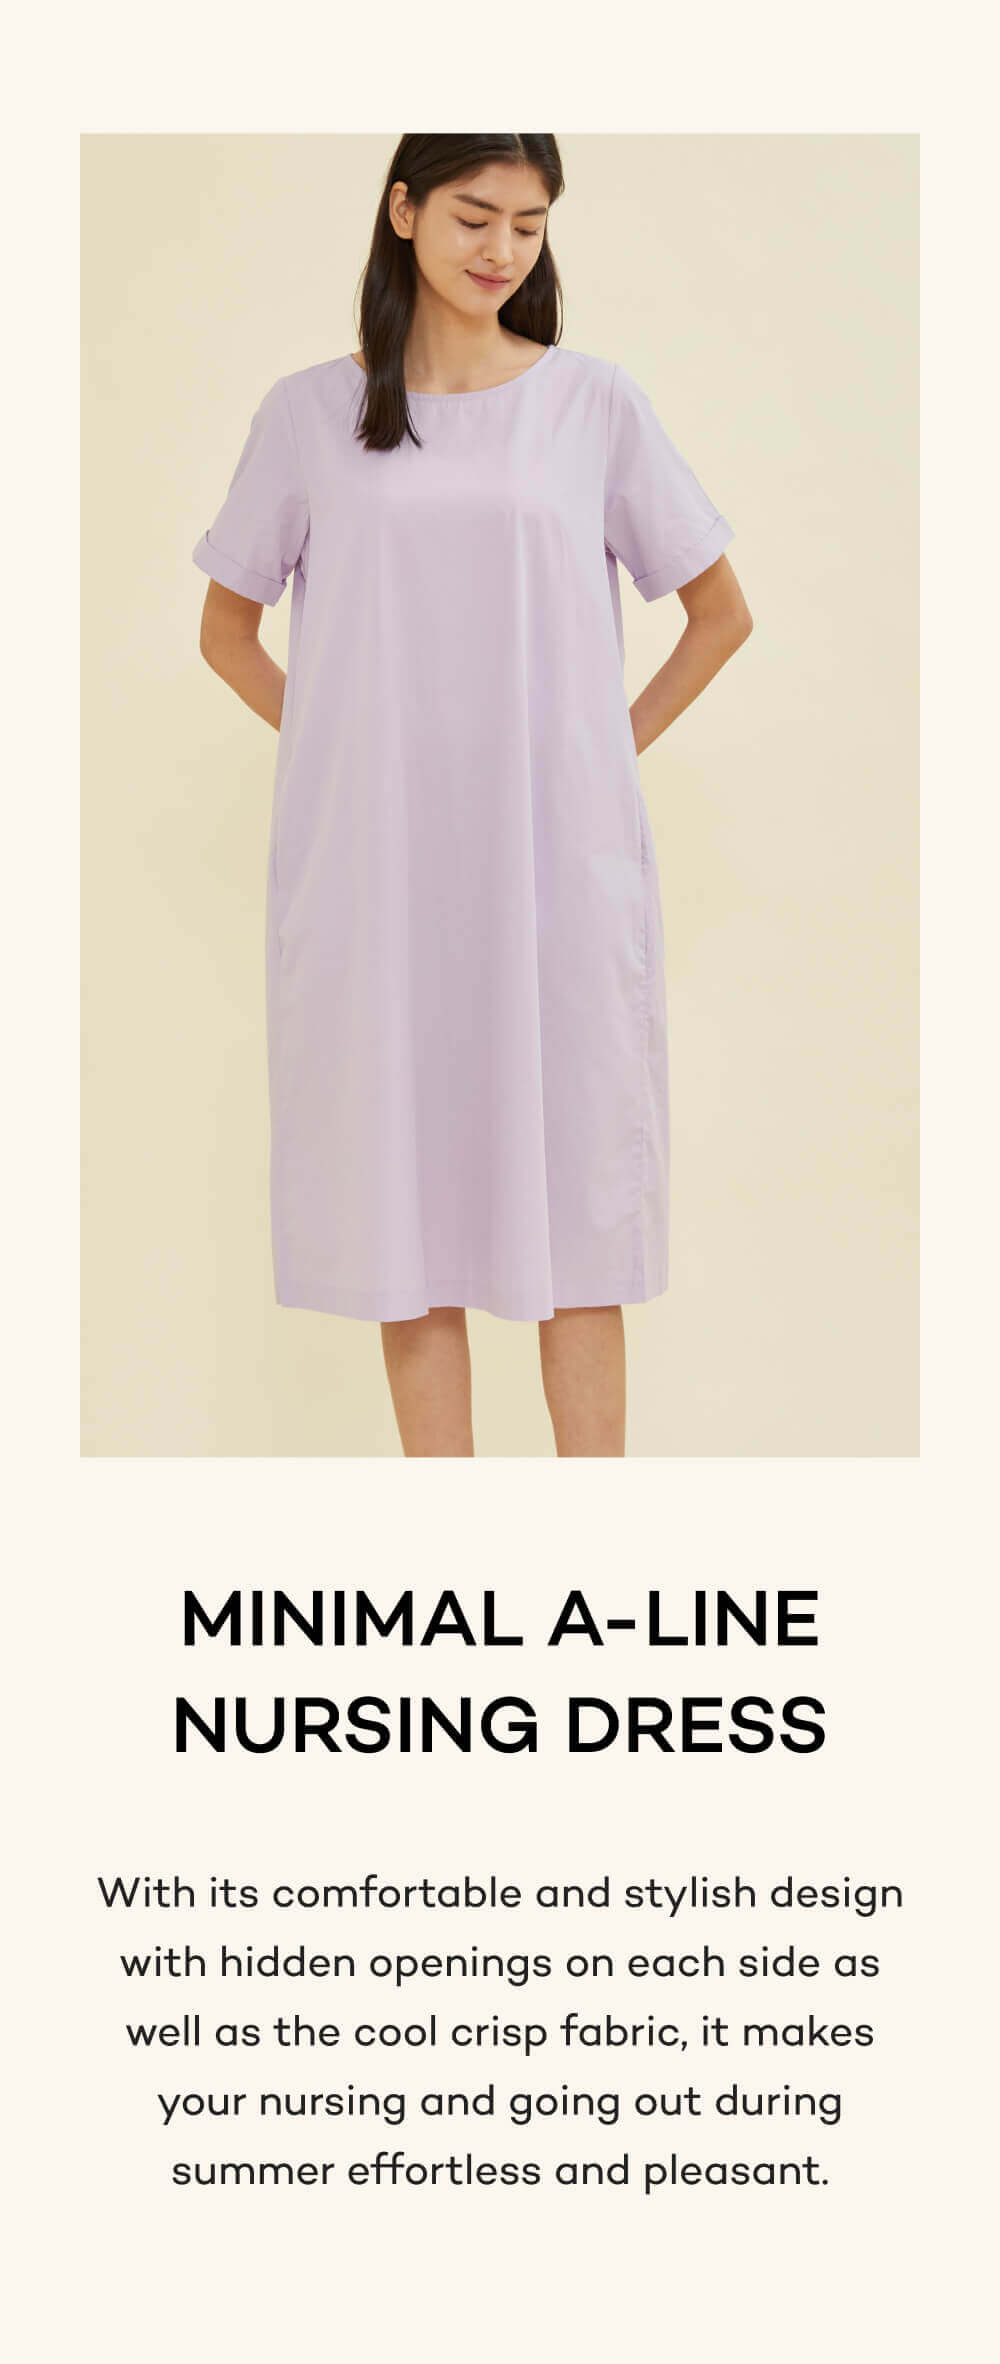 Minimal A-Line Nursing Dress